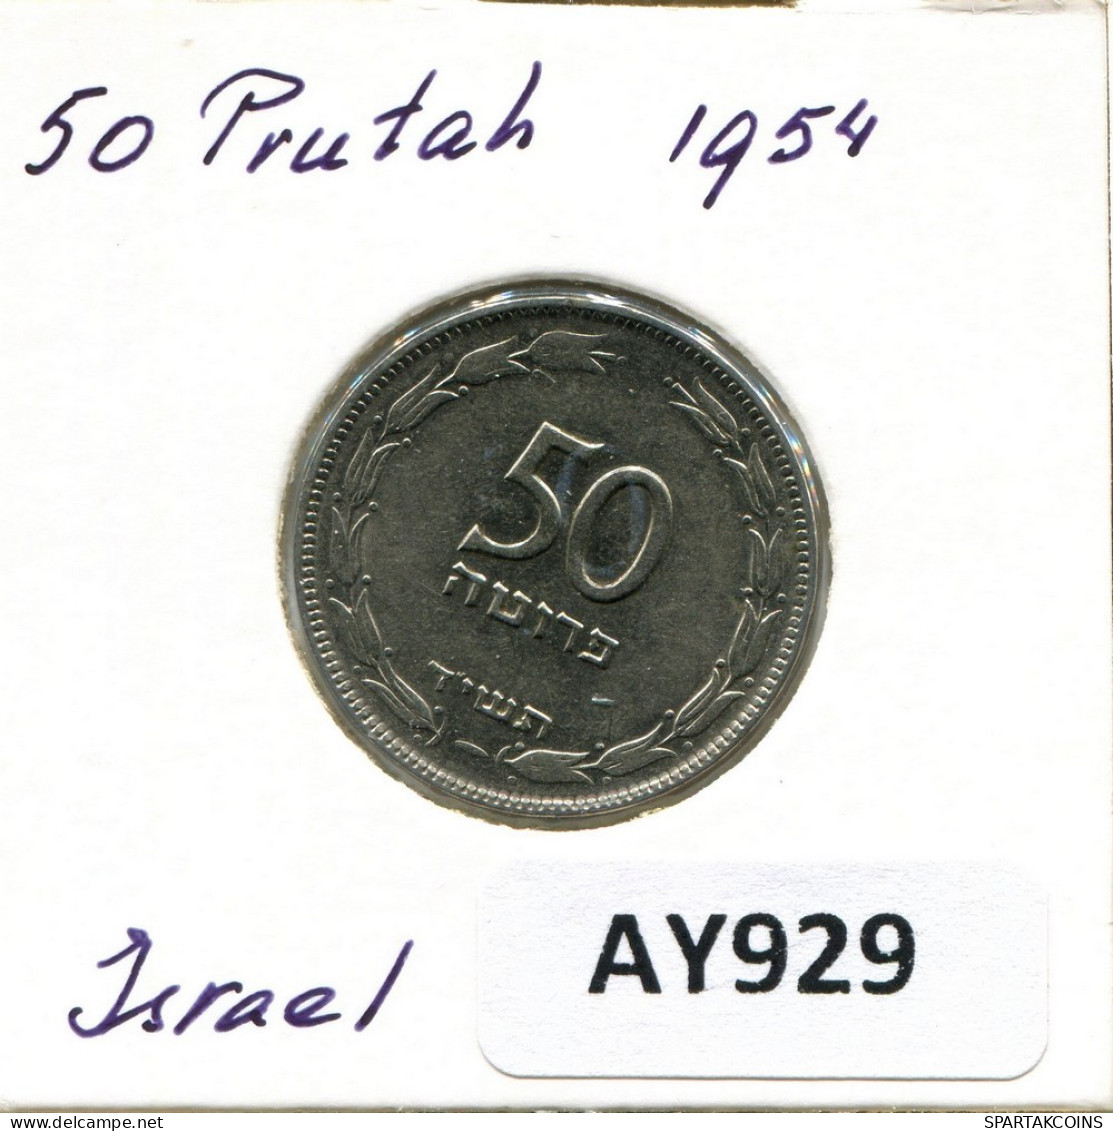 50 PRUTA 1954 ISRAEL Coin #AY929.U.A - Israel